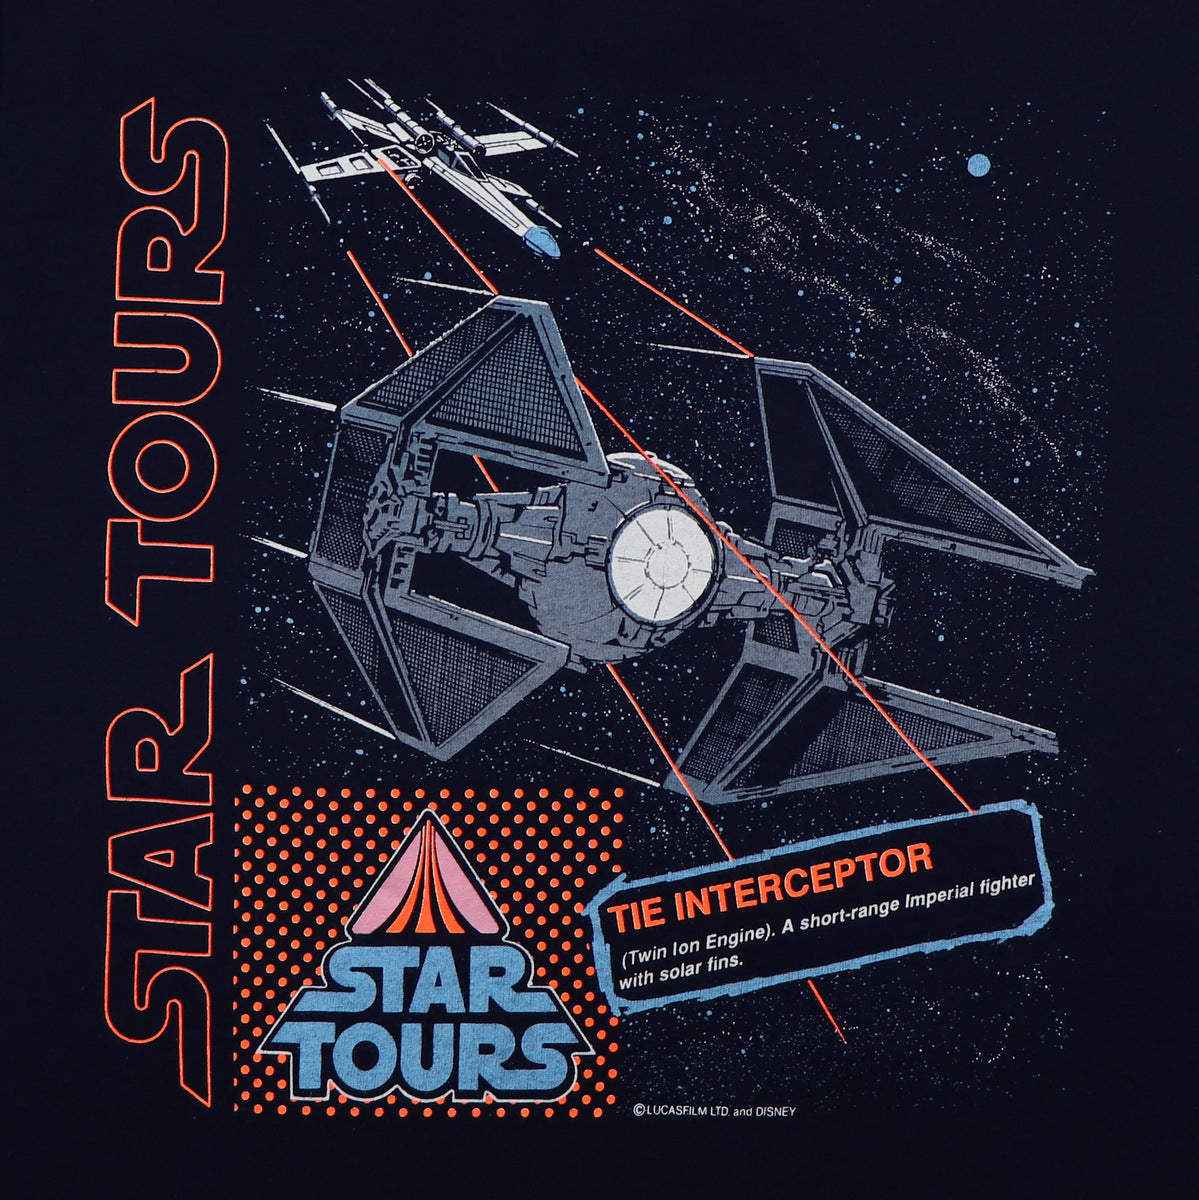 1980s Disney Star Wars Star Tours Interceptor Shirt